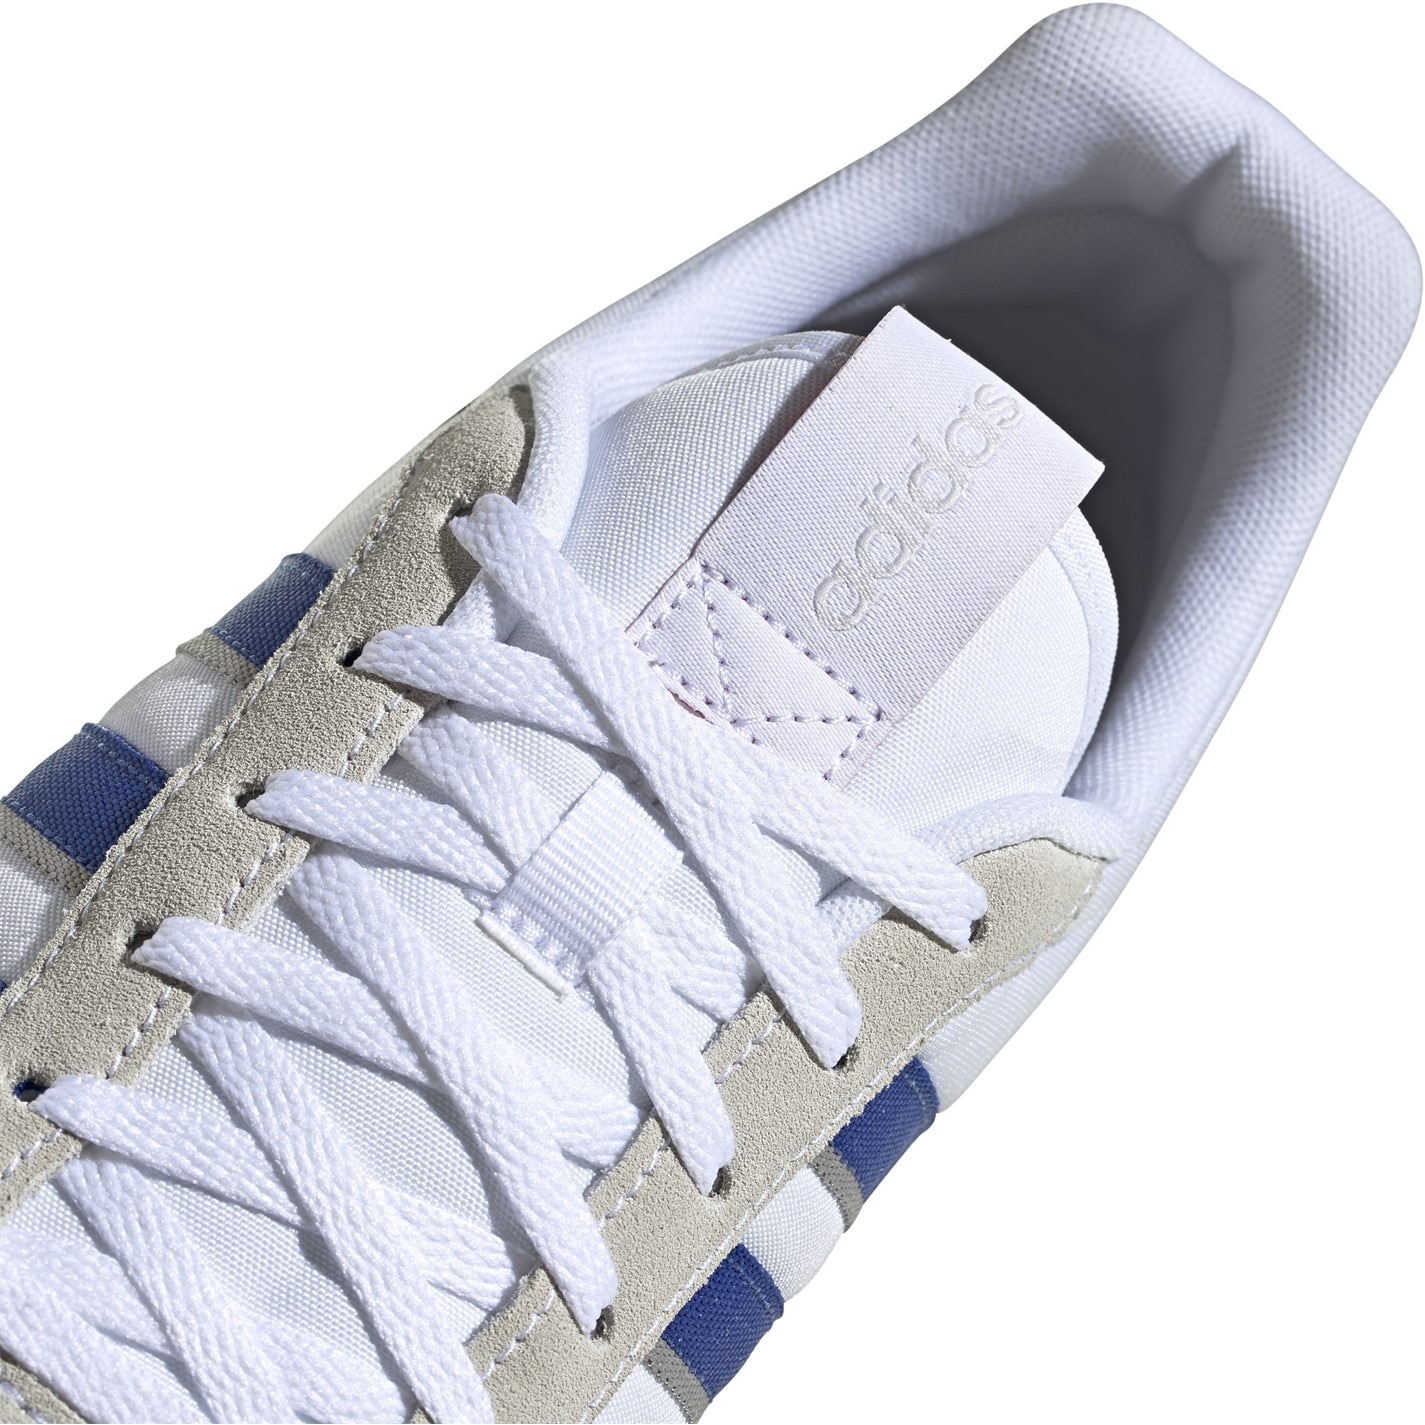 Adidasi sport adidas adidas Retrorunner clasic pentru Barbati alb albastru rosu